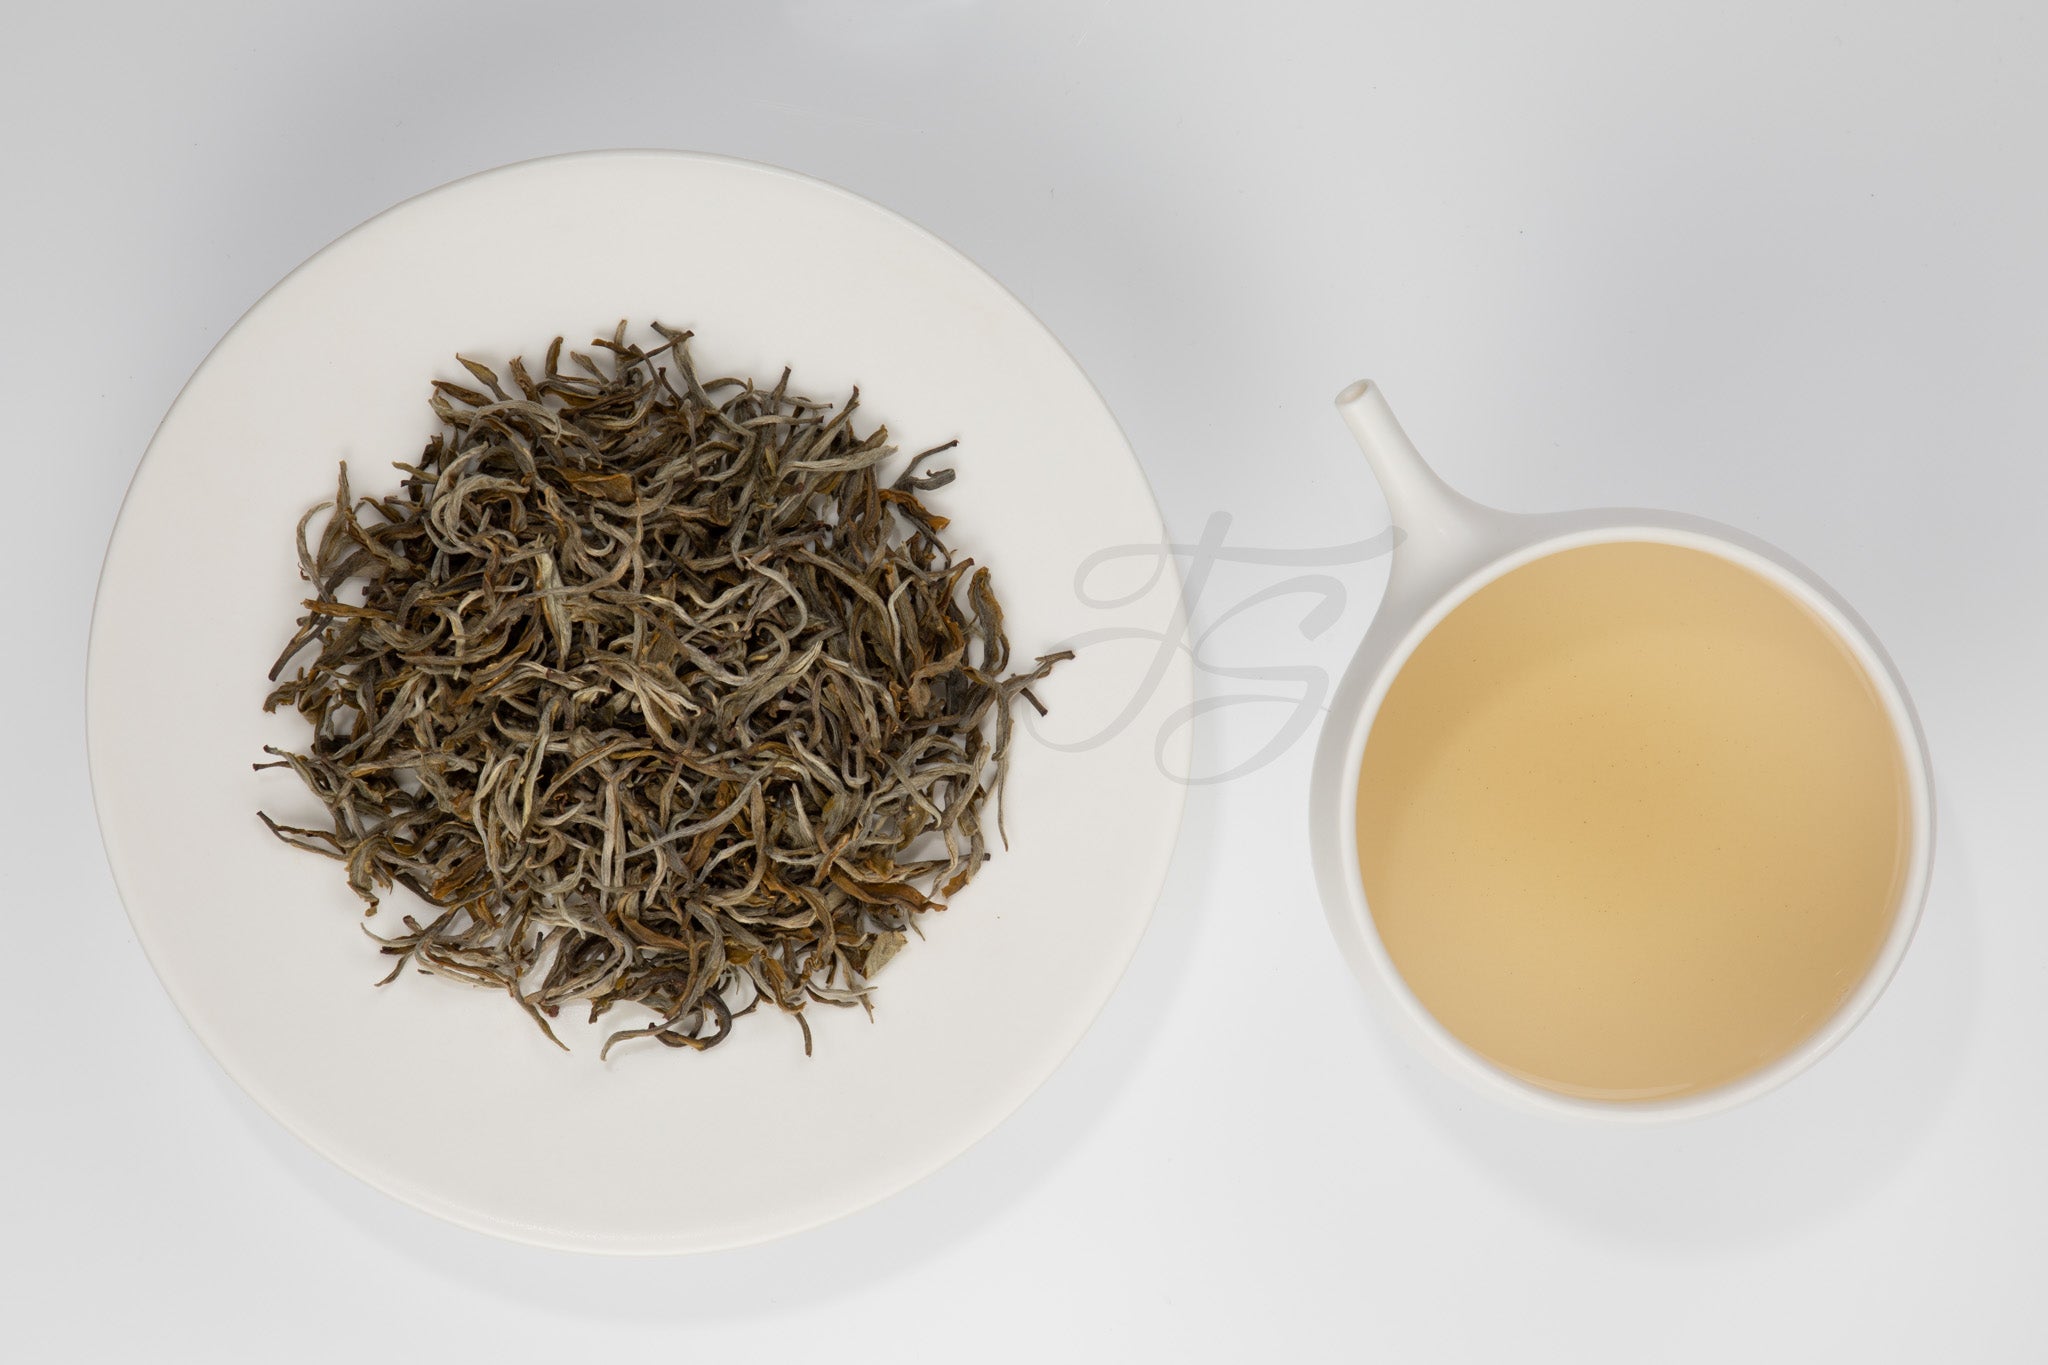 Organic Tea Yunnan Supreme (Green tea)